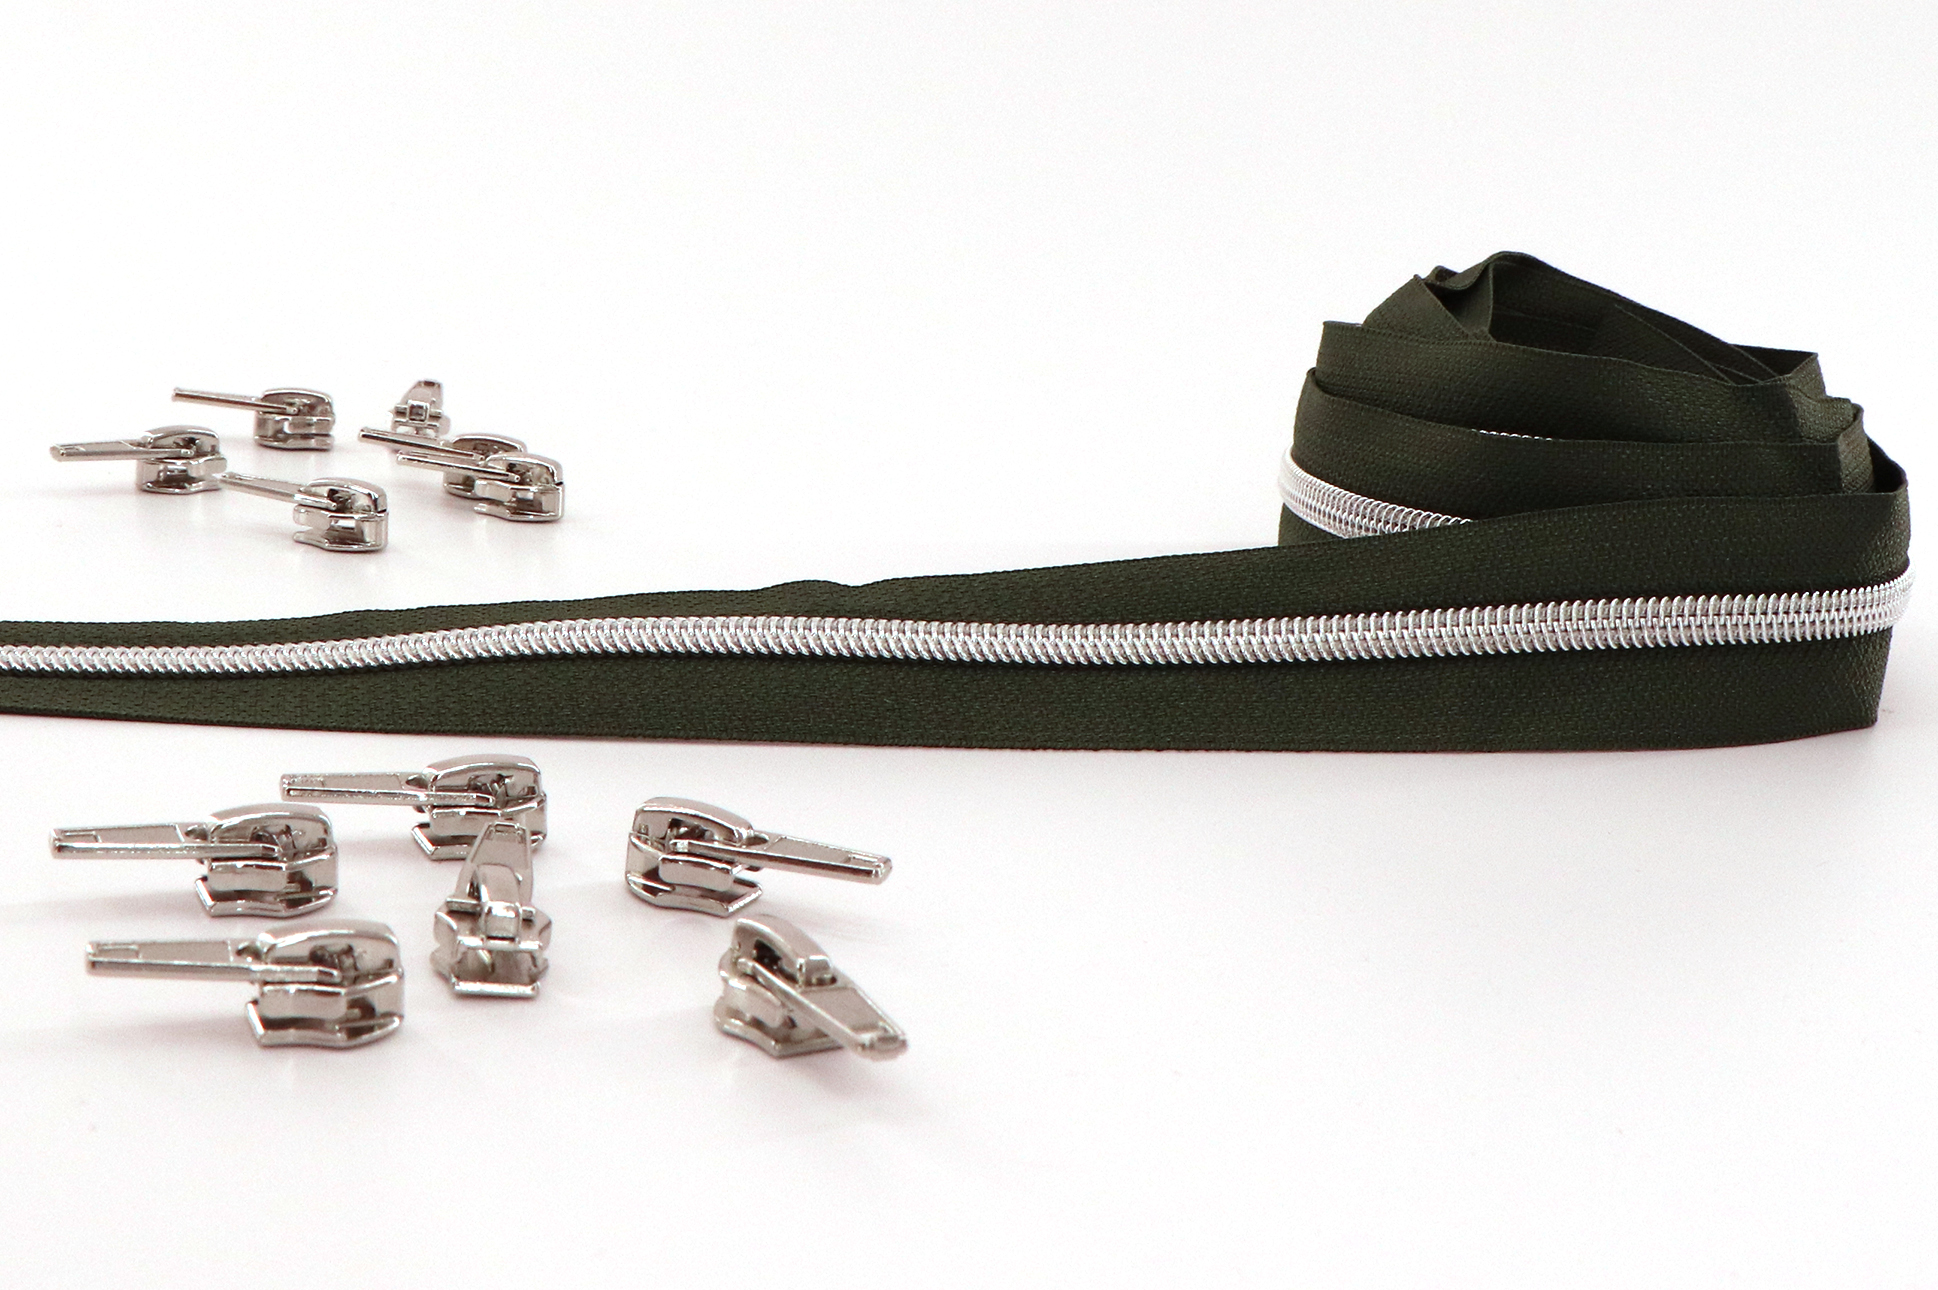 Endlosreißverschluss 3m lang, 6,5mm breite Schiene, 12 Zipper, silber glänzend